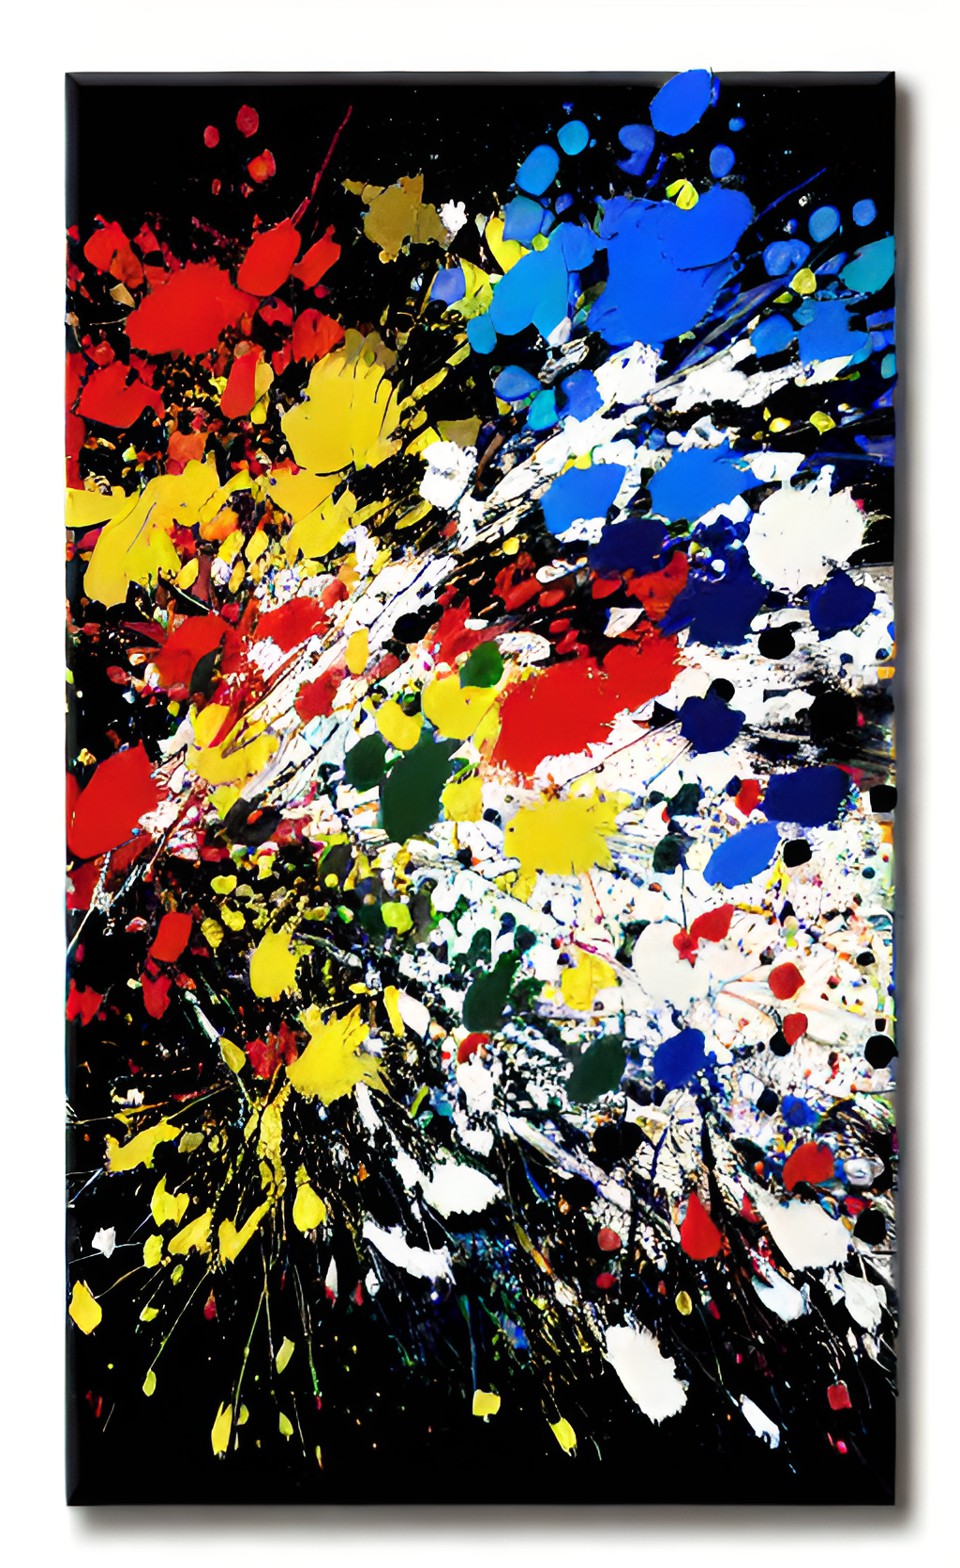 Jackson Pollock like splatter painting on canvas.